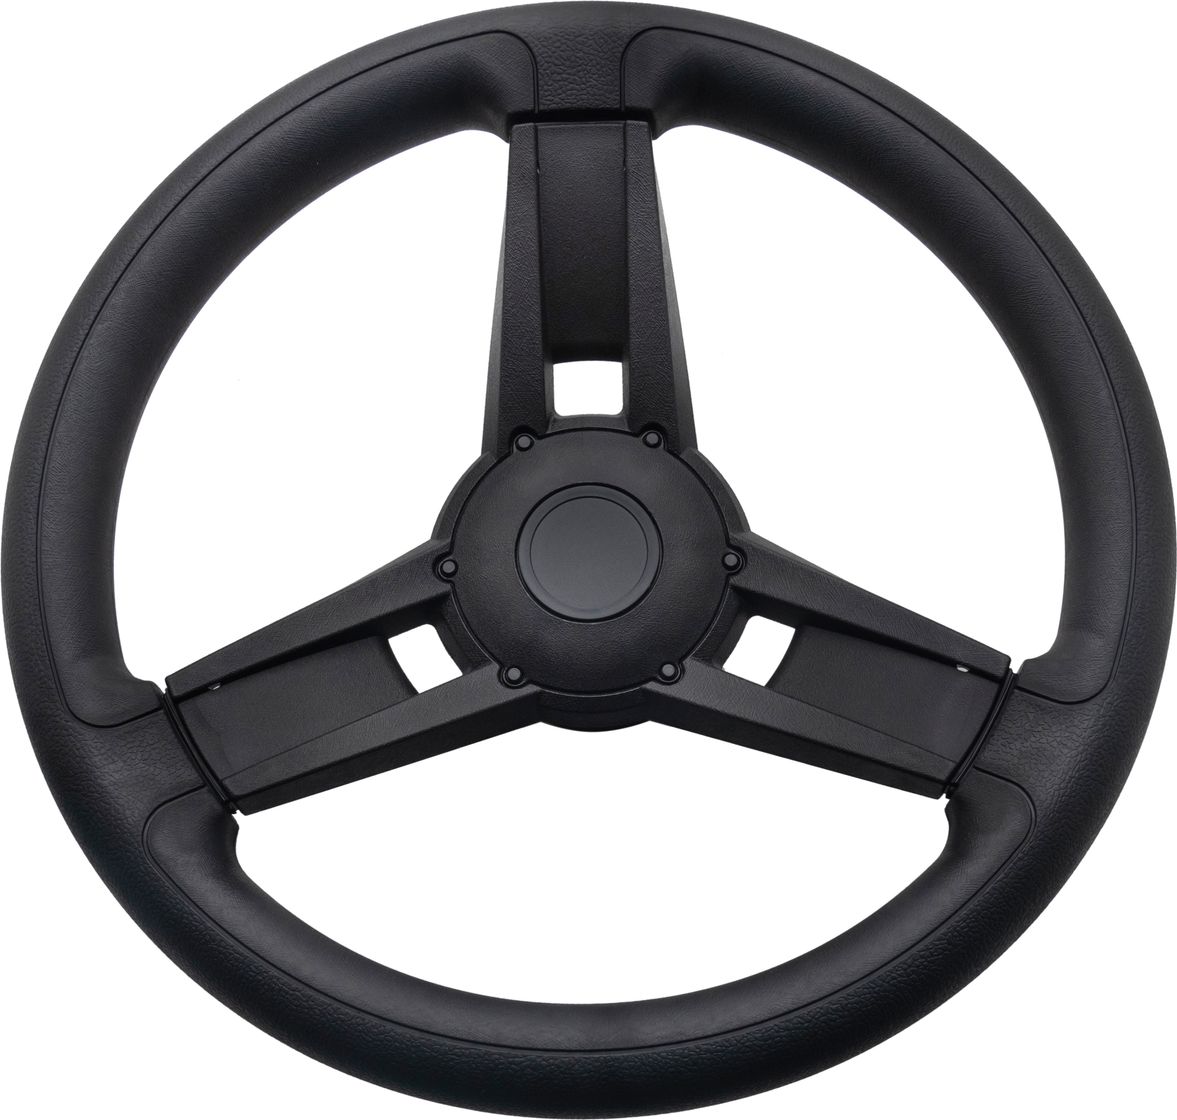 Рулевое колесо GIAZZA черное, д.350 мм 3GZA3521 колесо для трюкового самоката фрезер алюм с подш abec9 110мм sub черное 00 180120